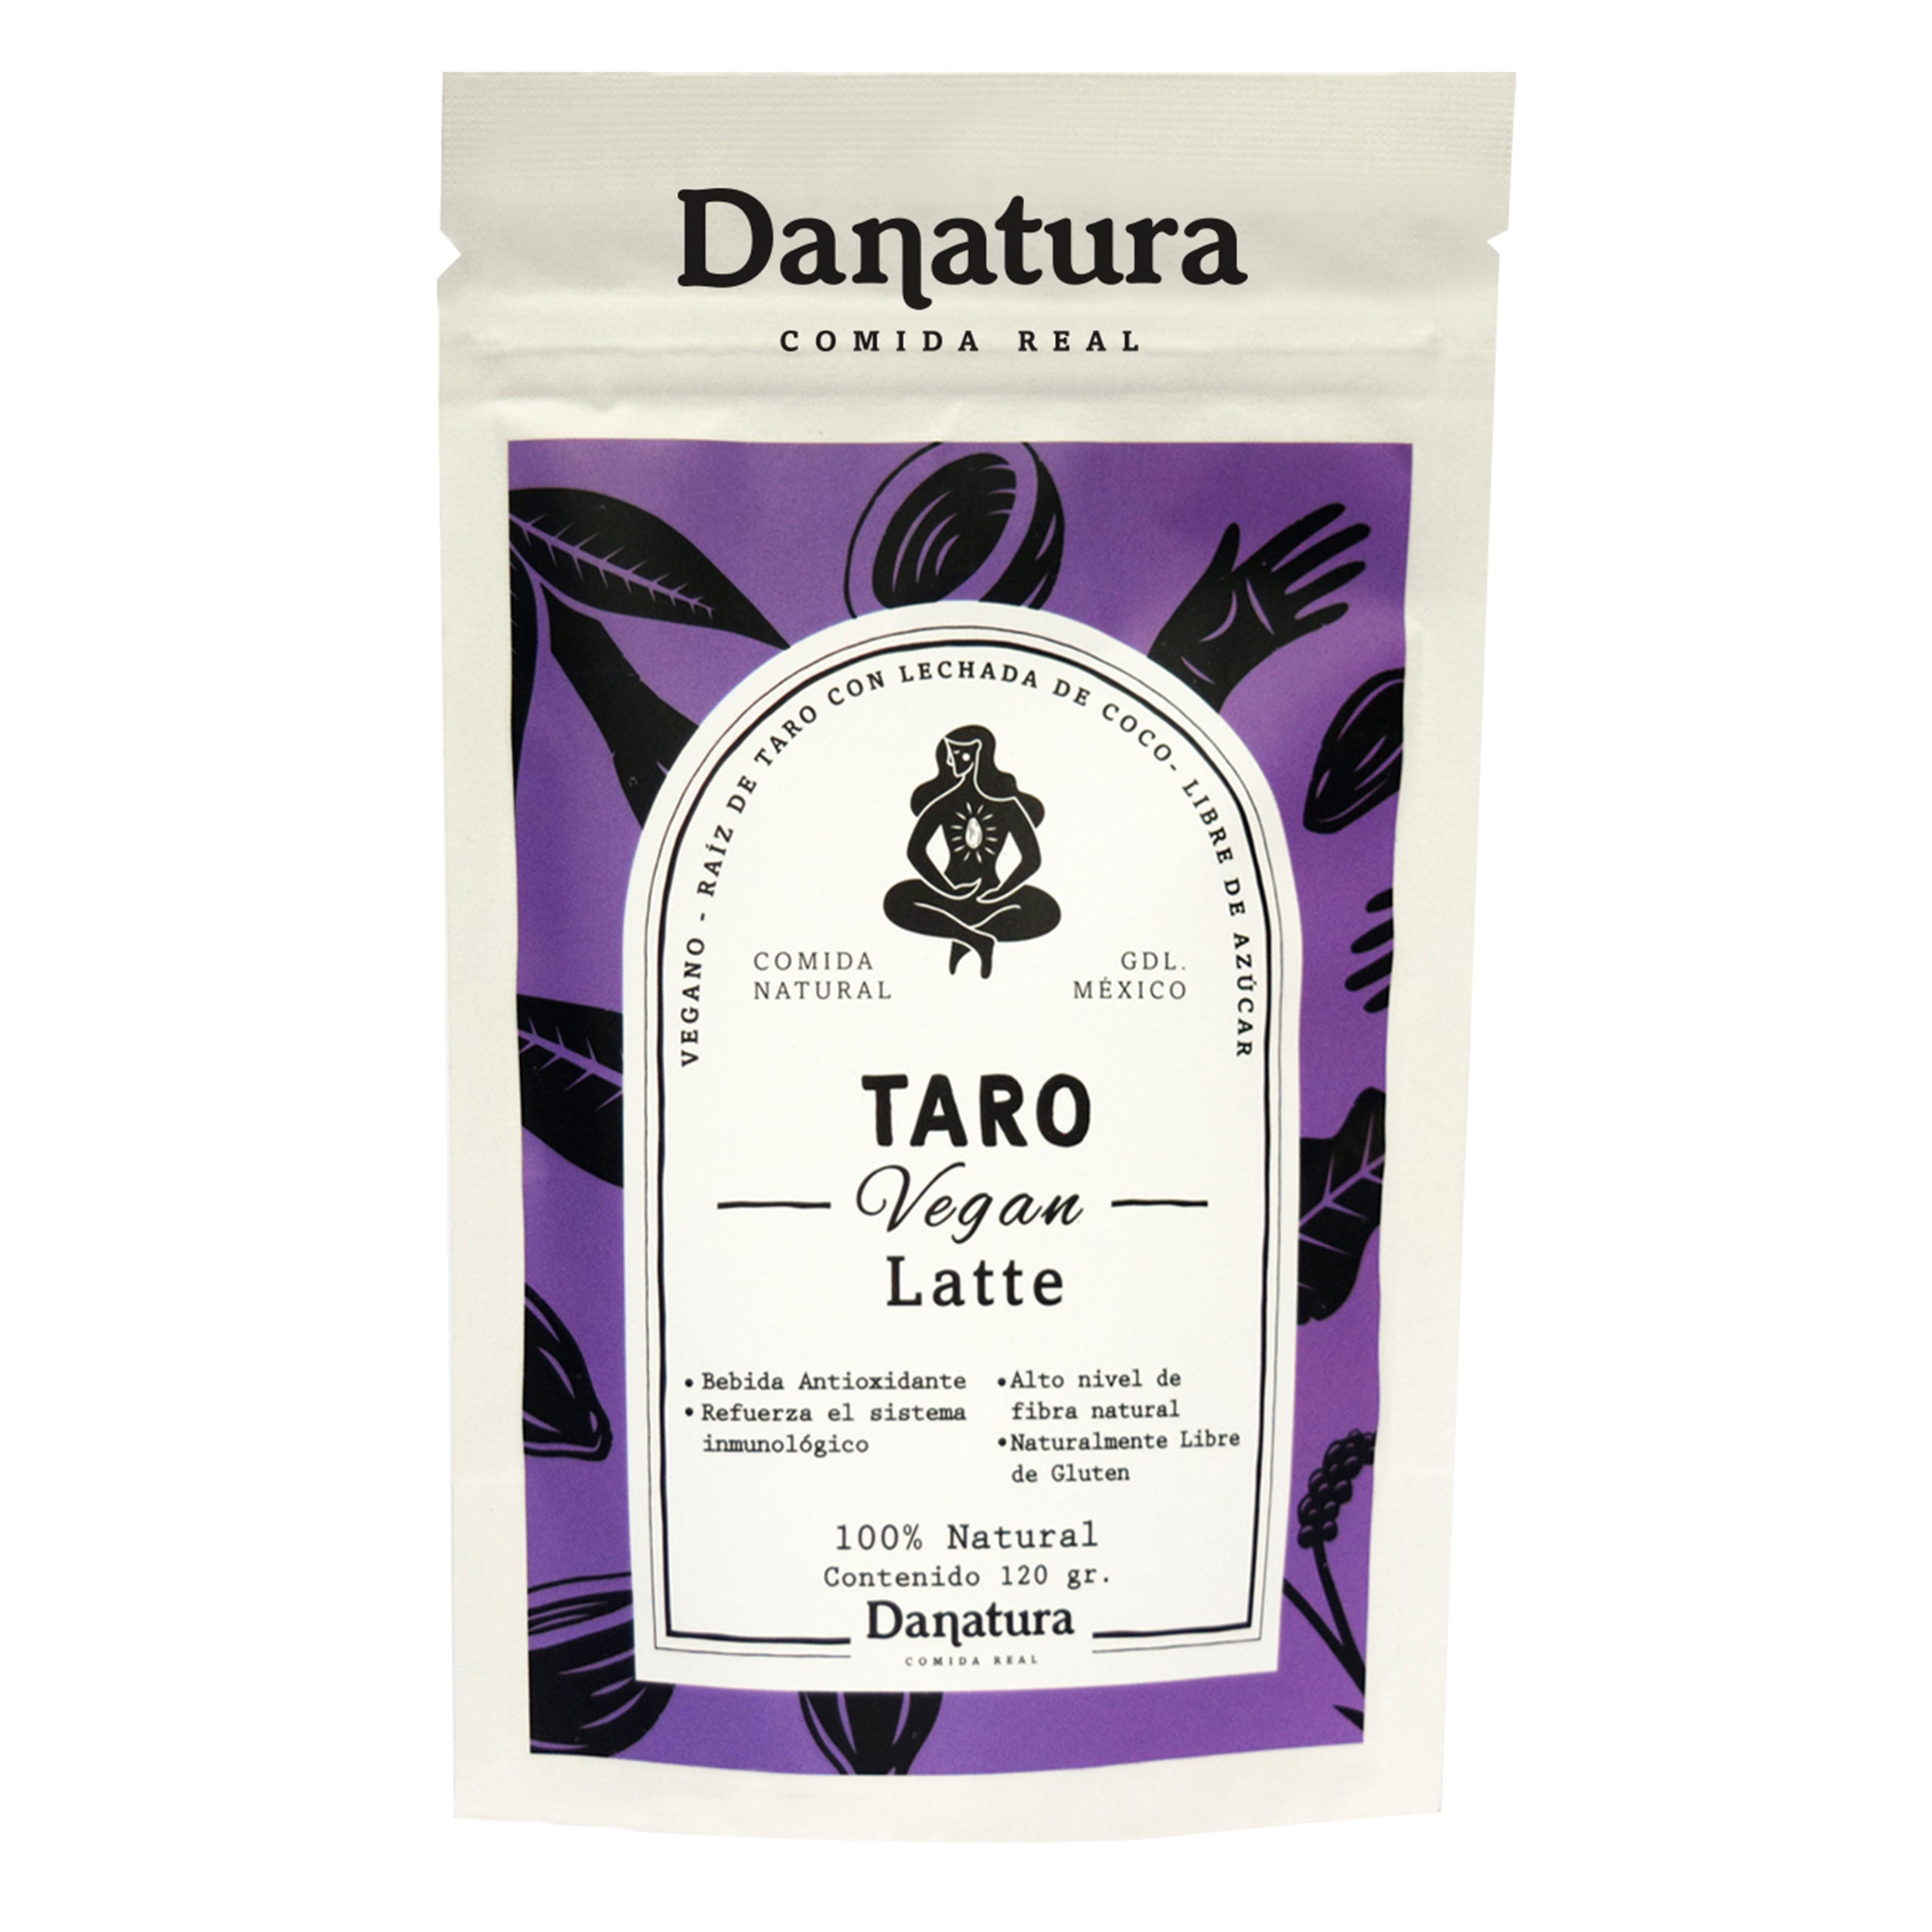 Danatura -Taro vegan latte